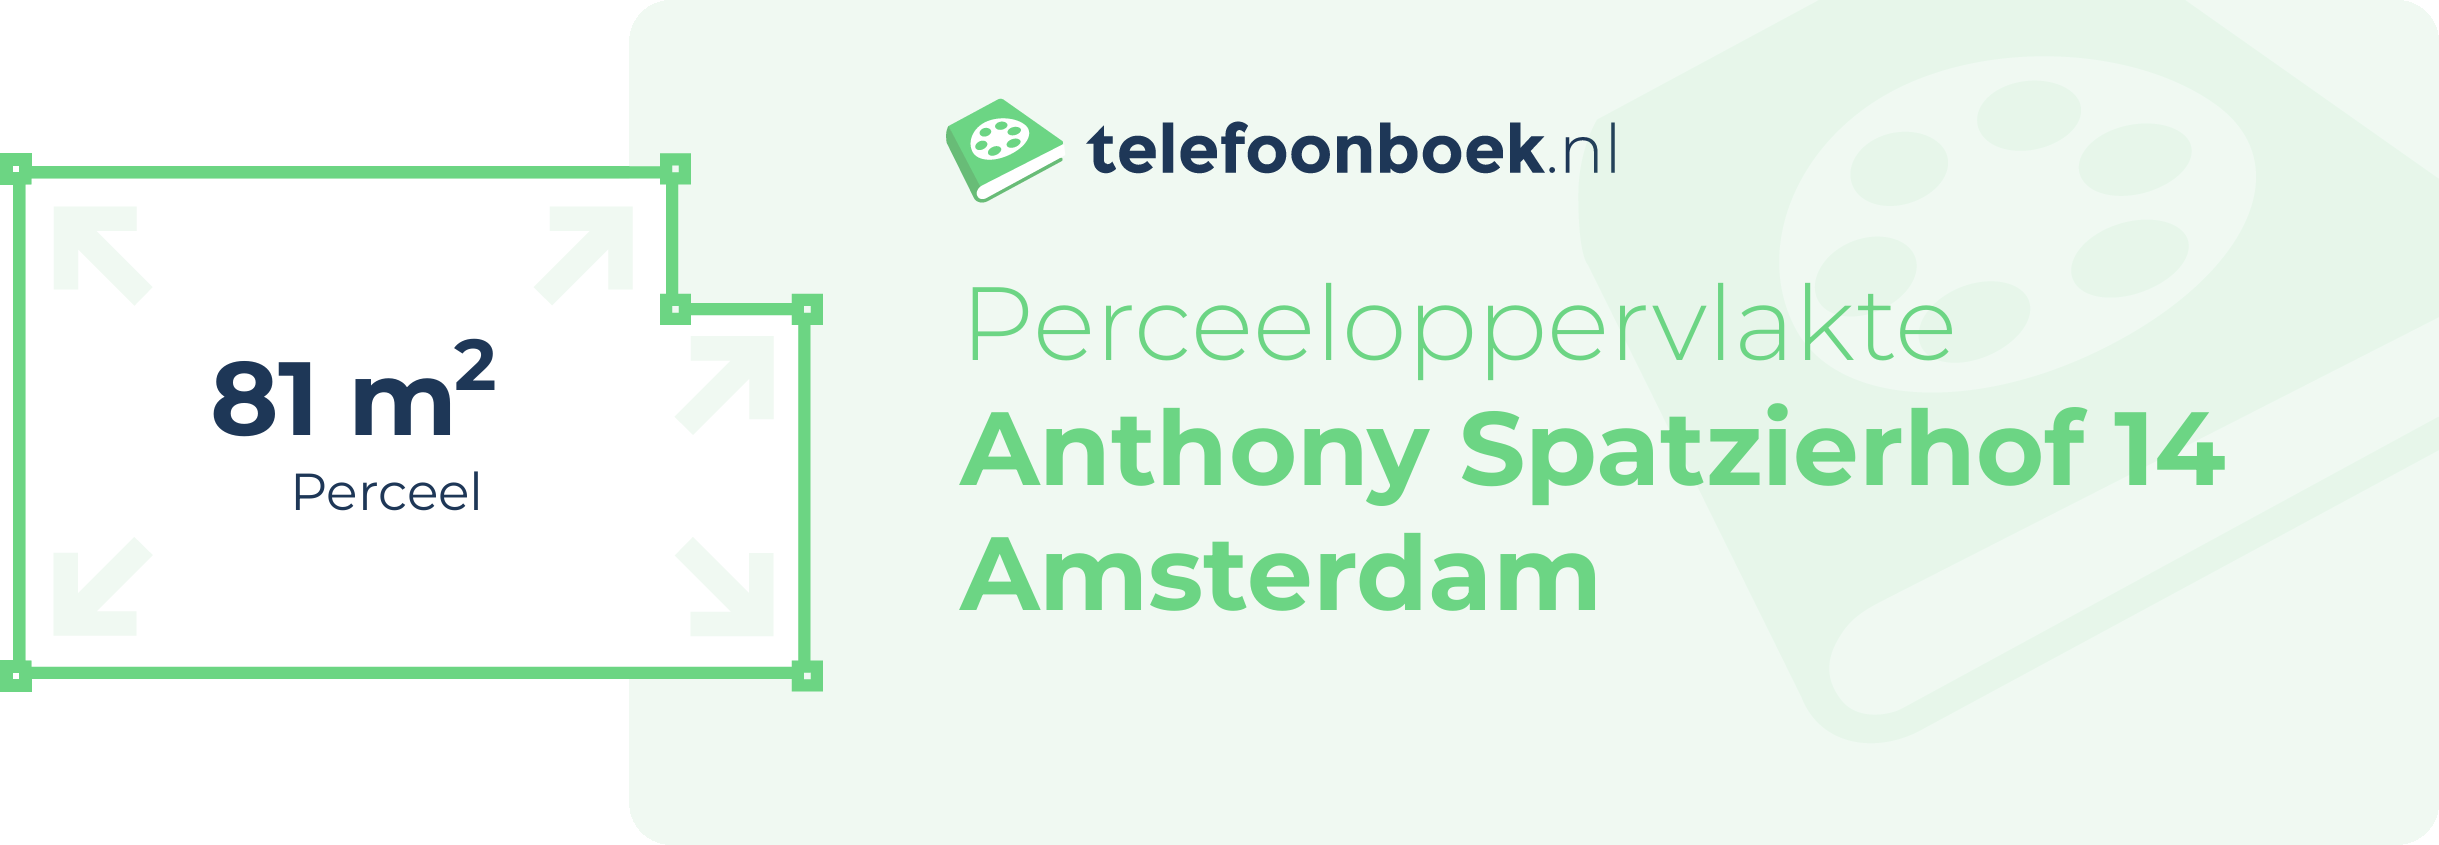 Perceeloppervlakte Anthony Spatzierhof 14 Amsterdam